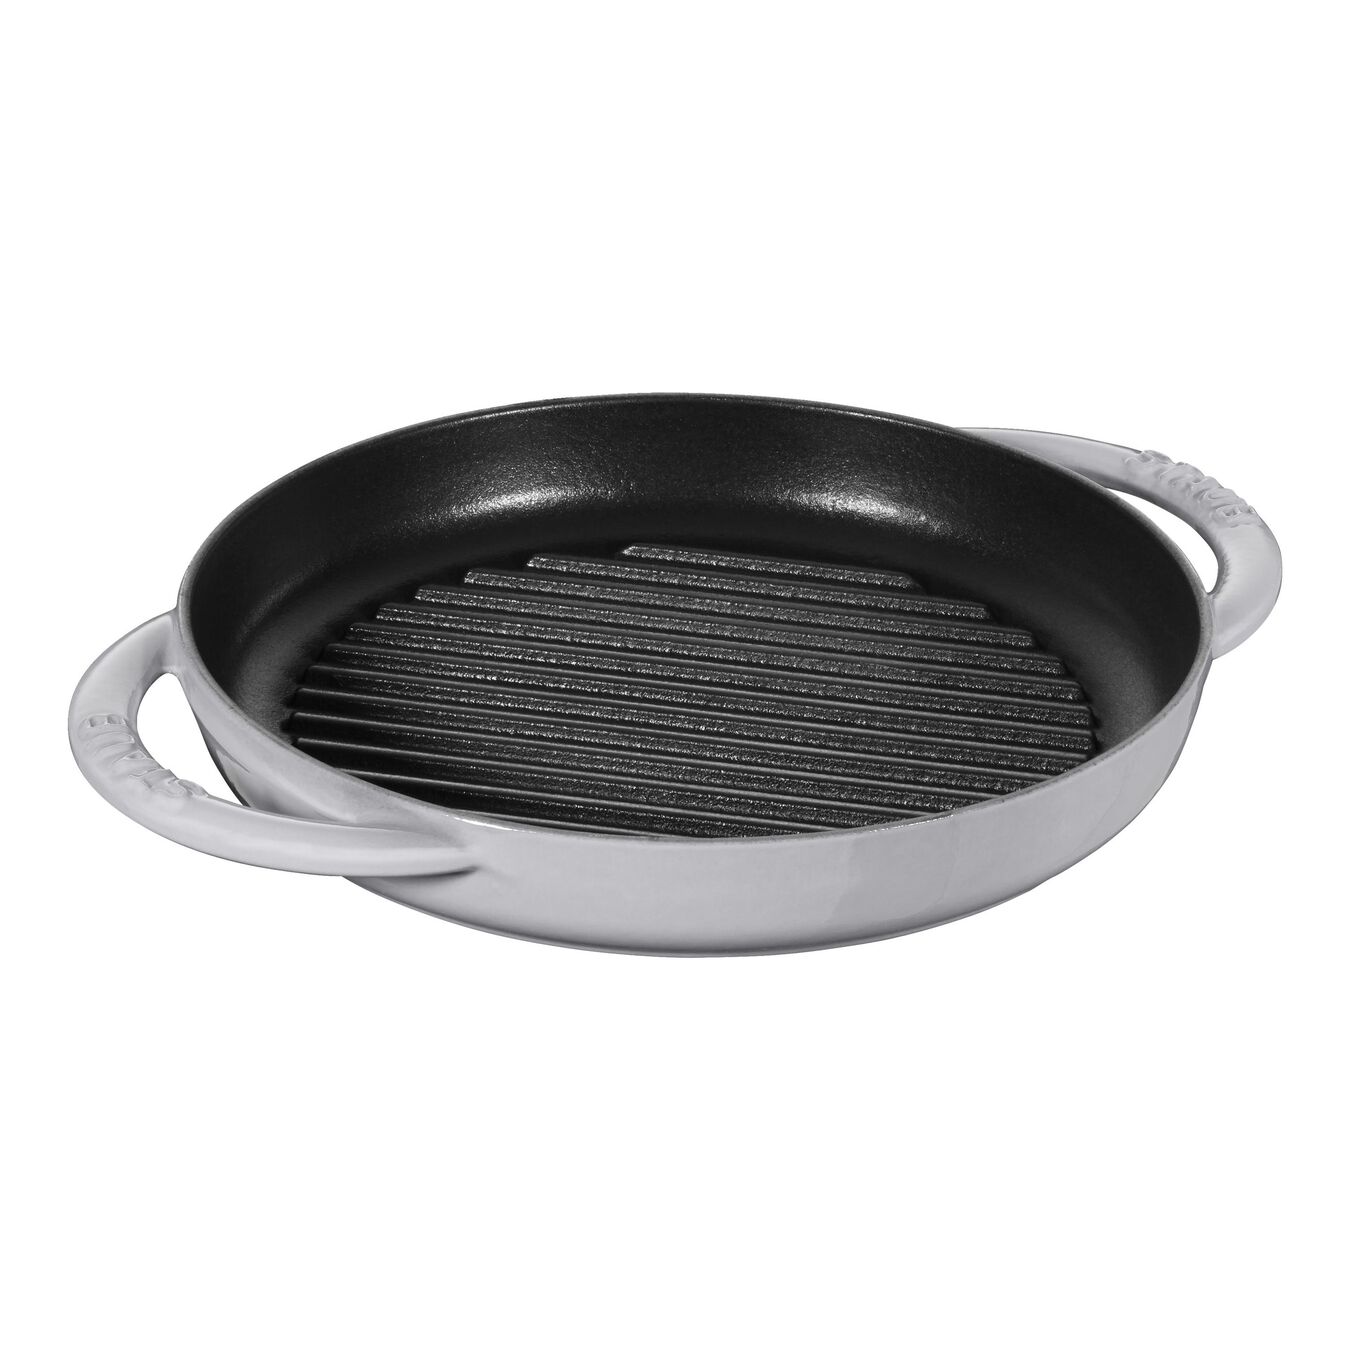 23 cm round Cast iron Pure Grill graphite-grey,,large 1